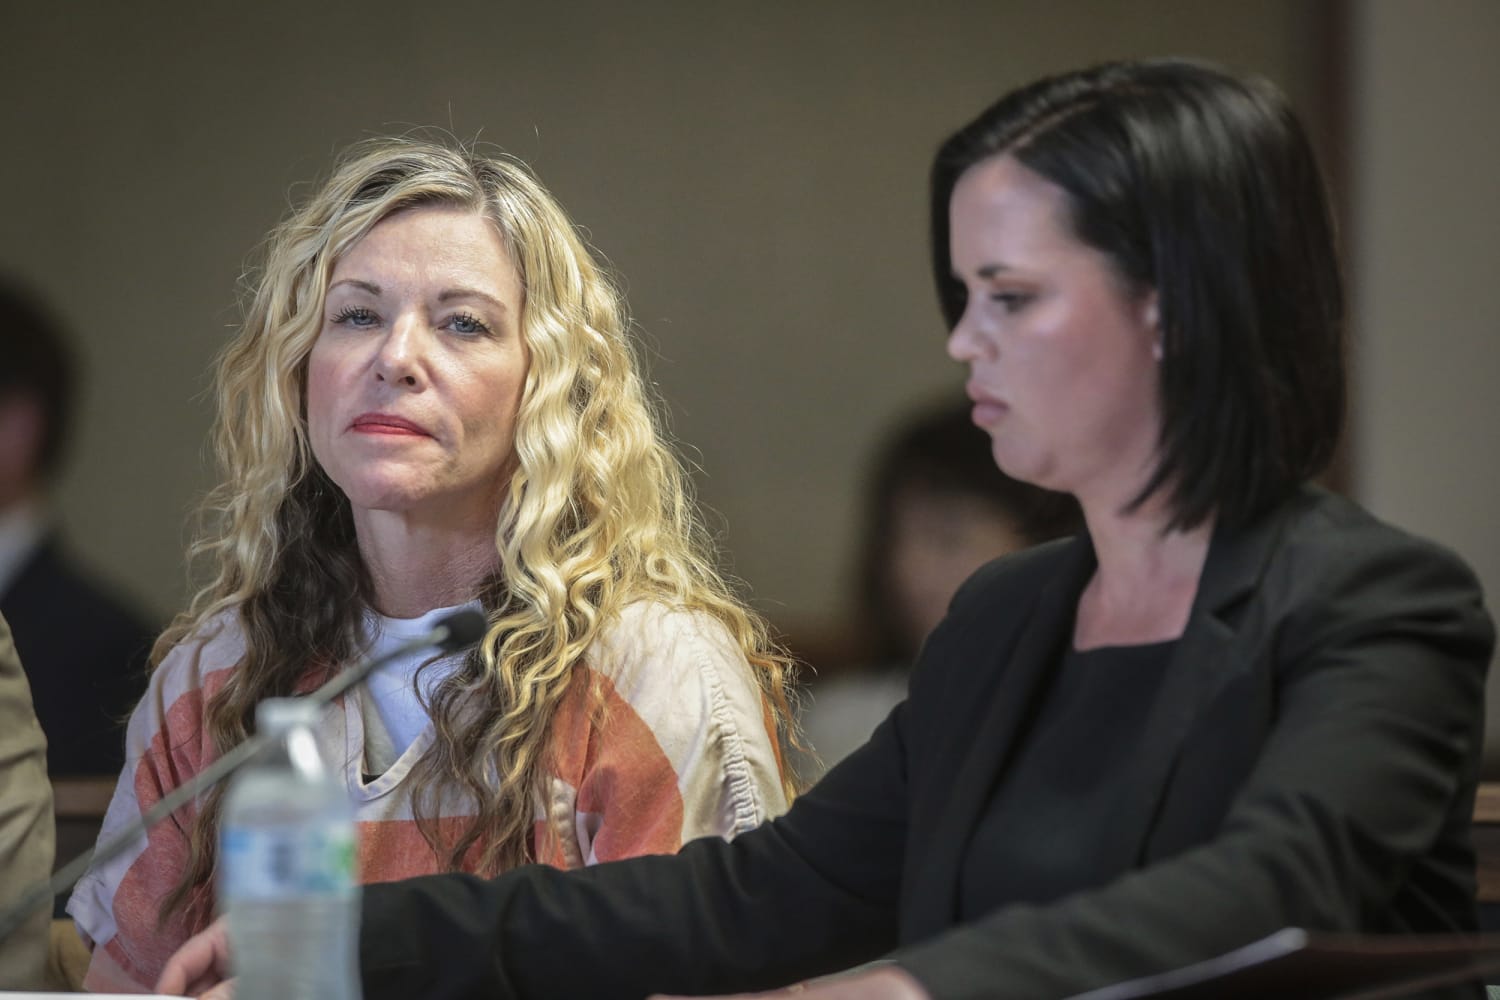 Lori Vallow won’t face the death penalty, Idaho judge rules